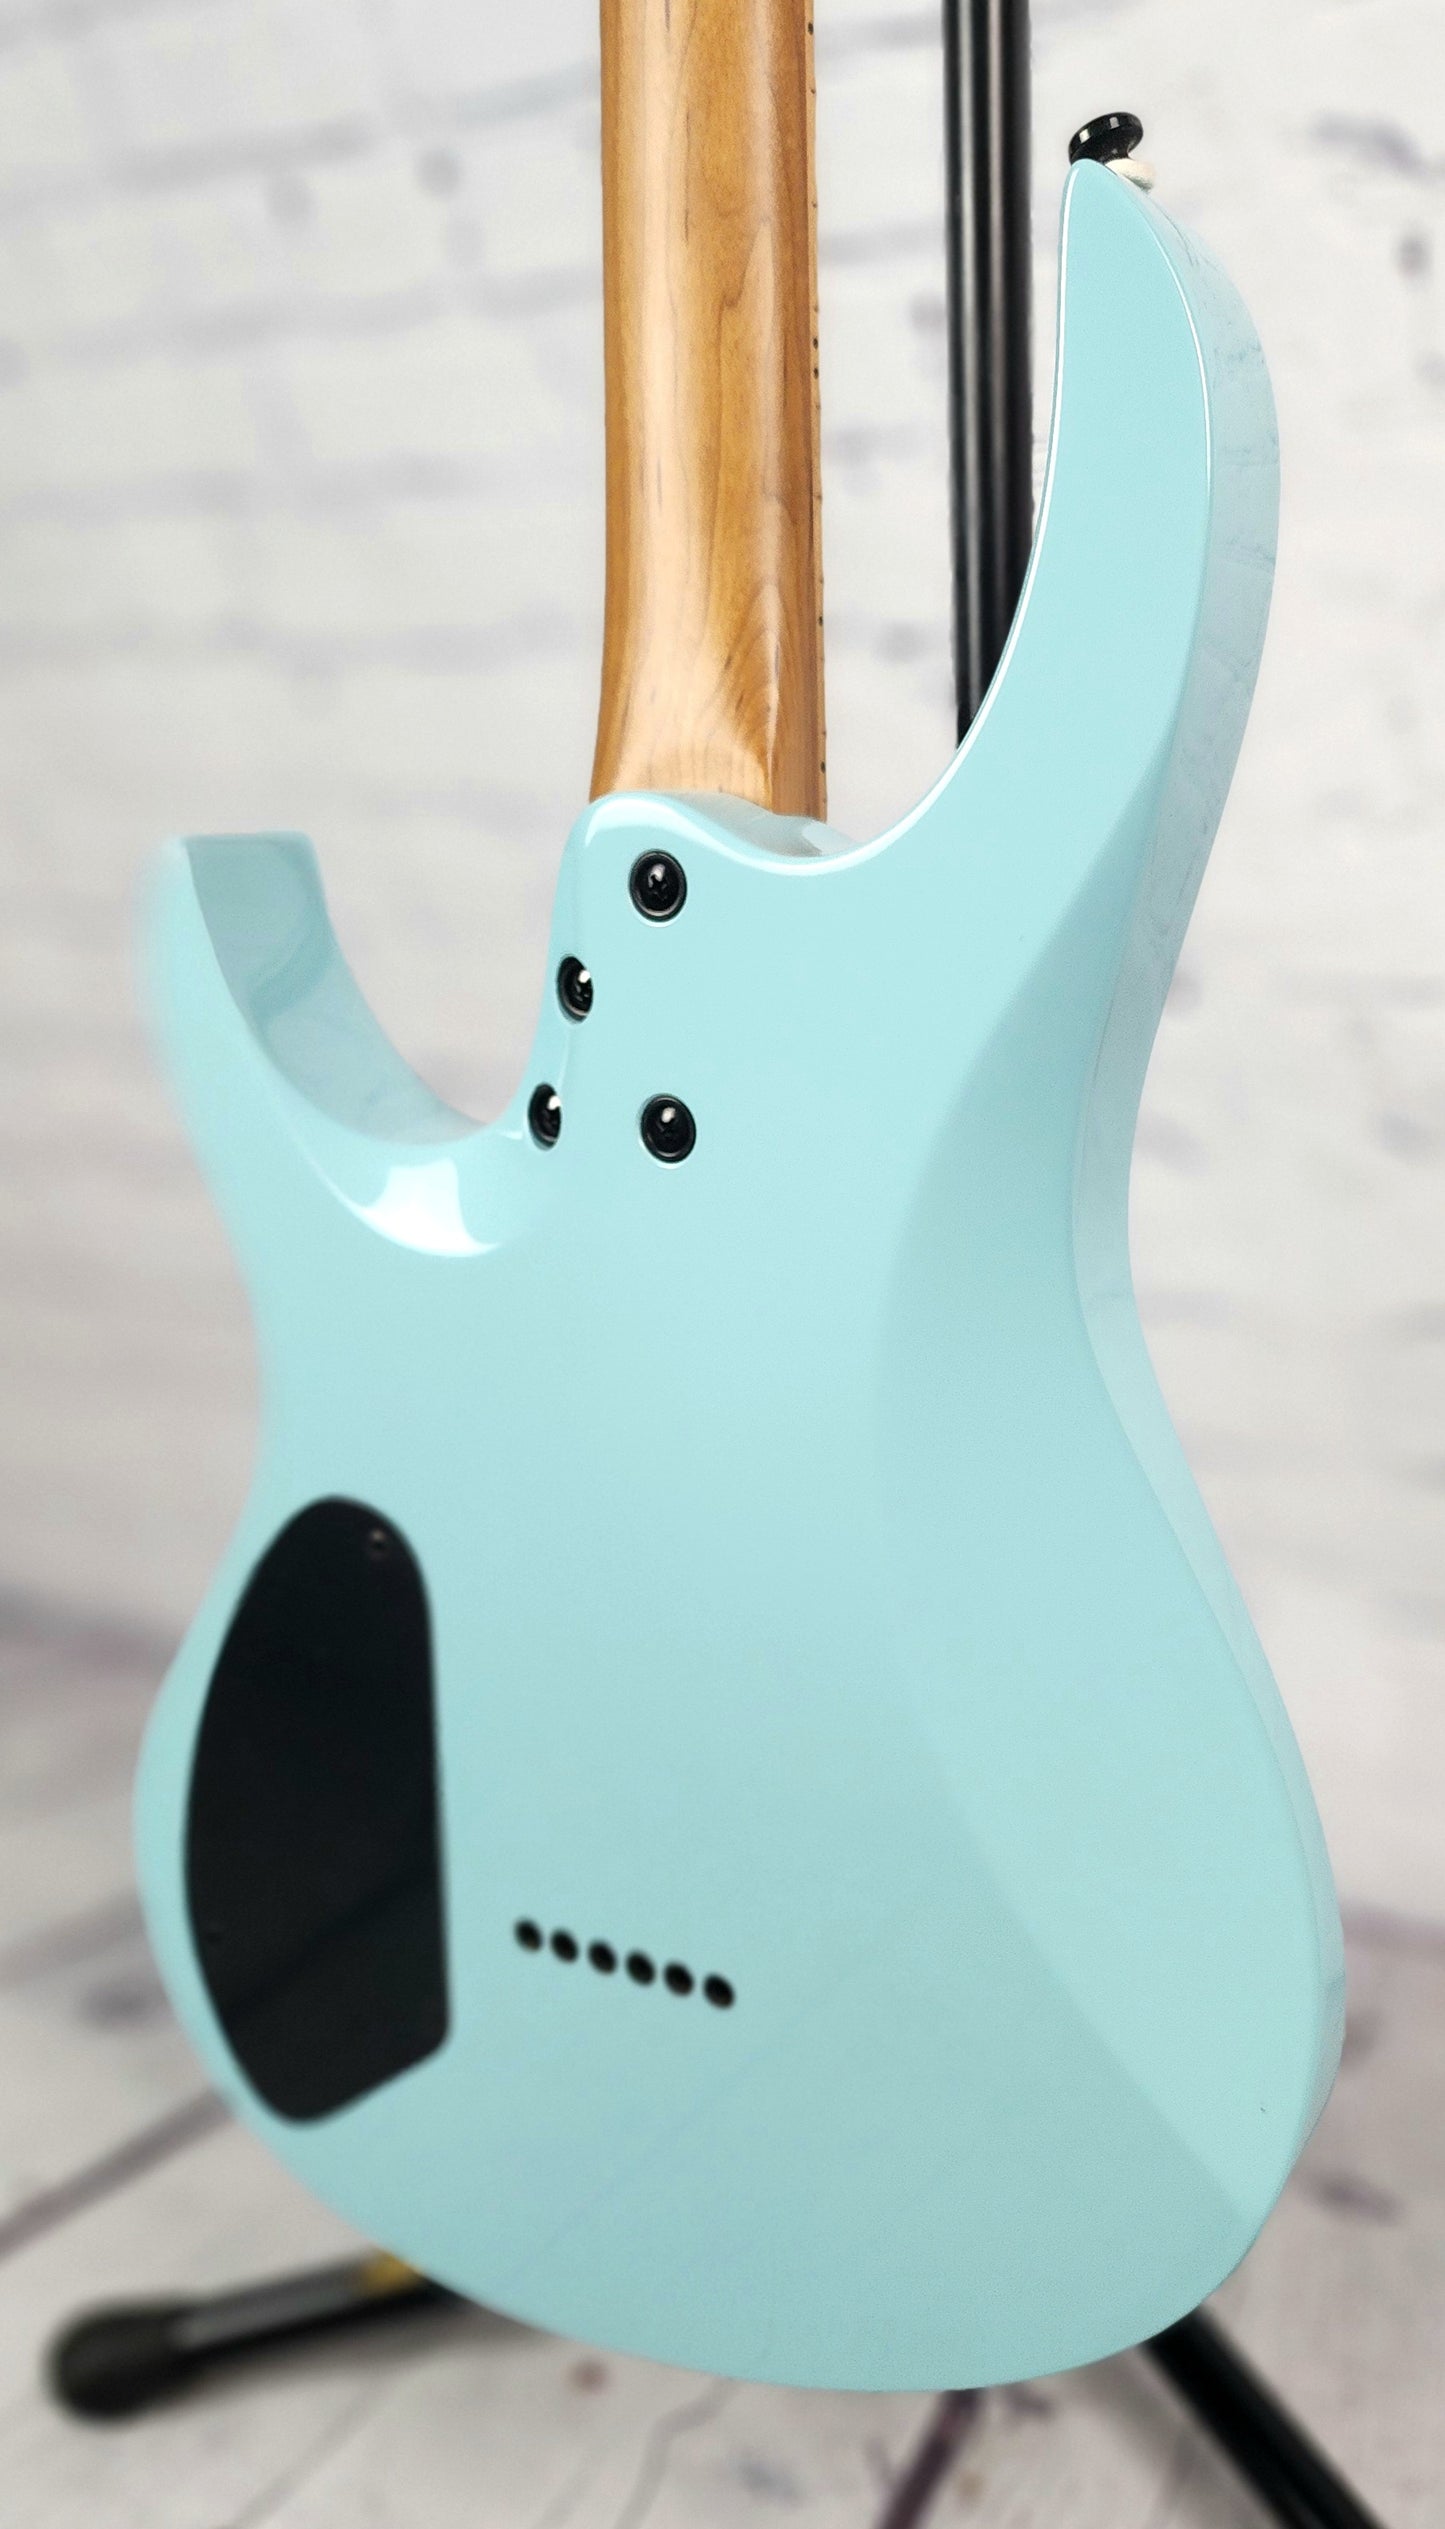 Balaguer Select Diablo Retro 27 6 String Electric Guitar Gloss Cerulean Blue Hipshot